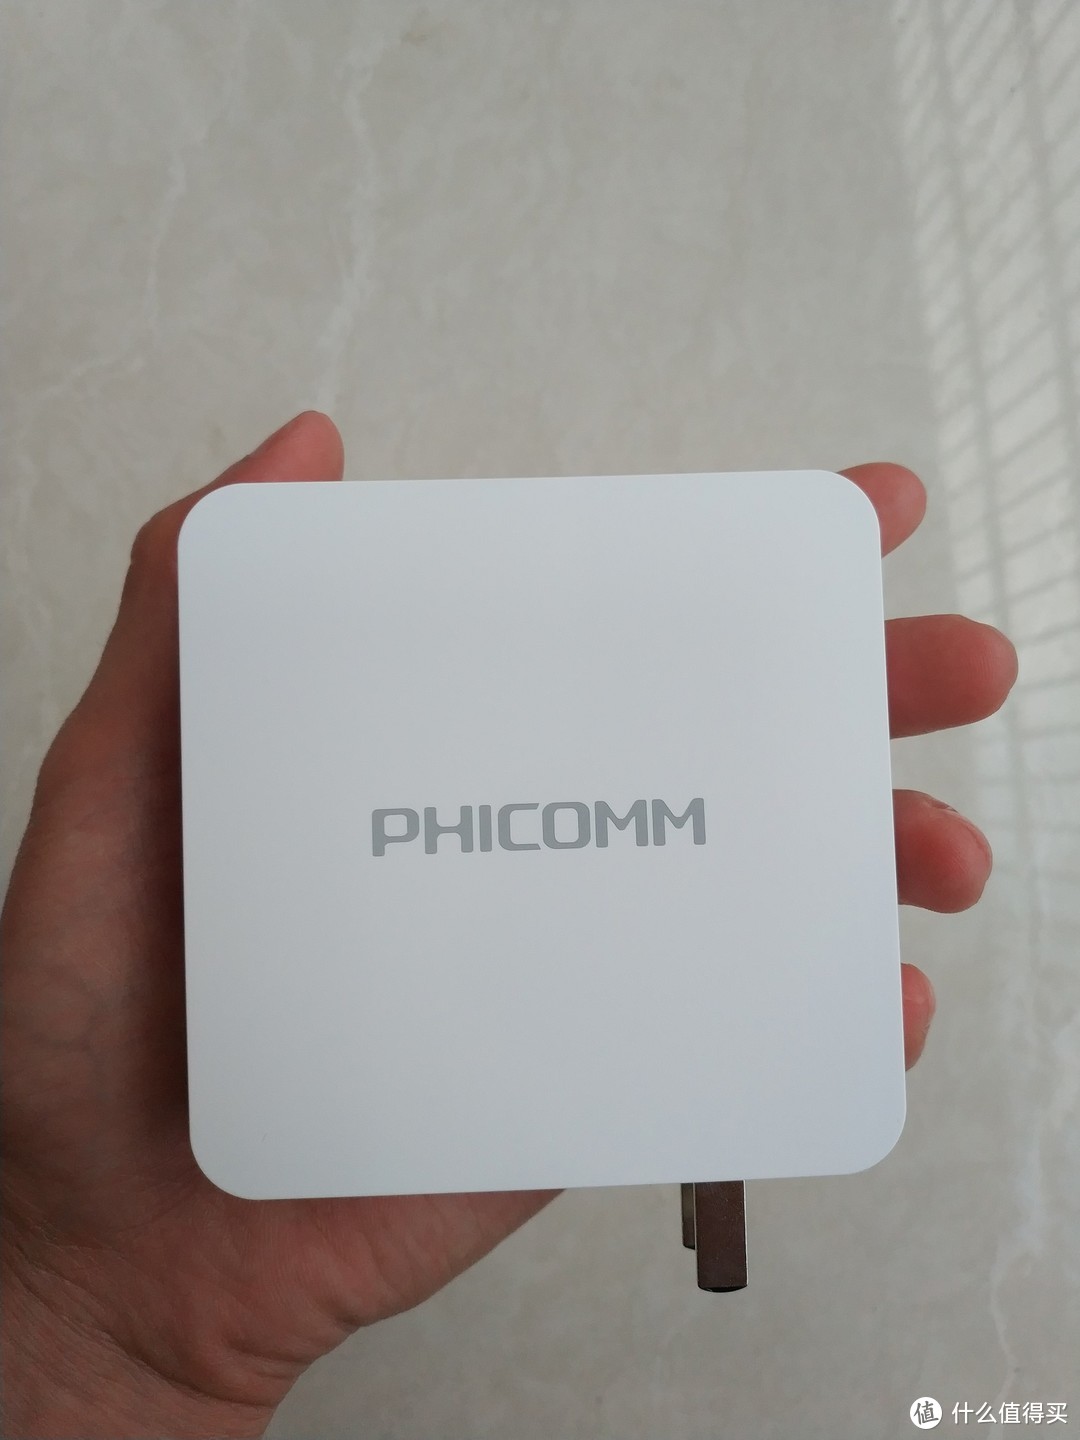 PHICOMM 斐讯 K2T 分离式千兆无线路由器 使用评测及拆机